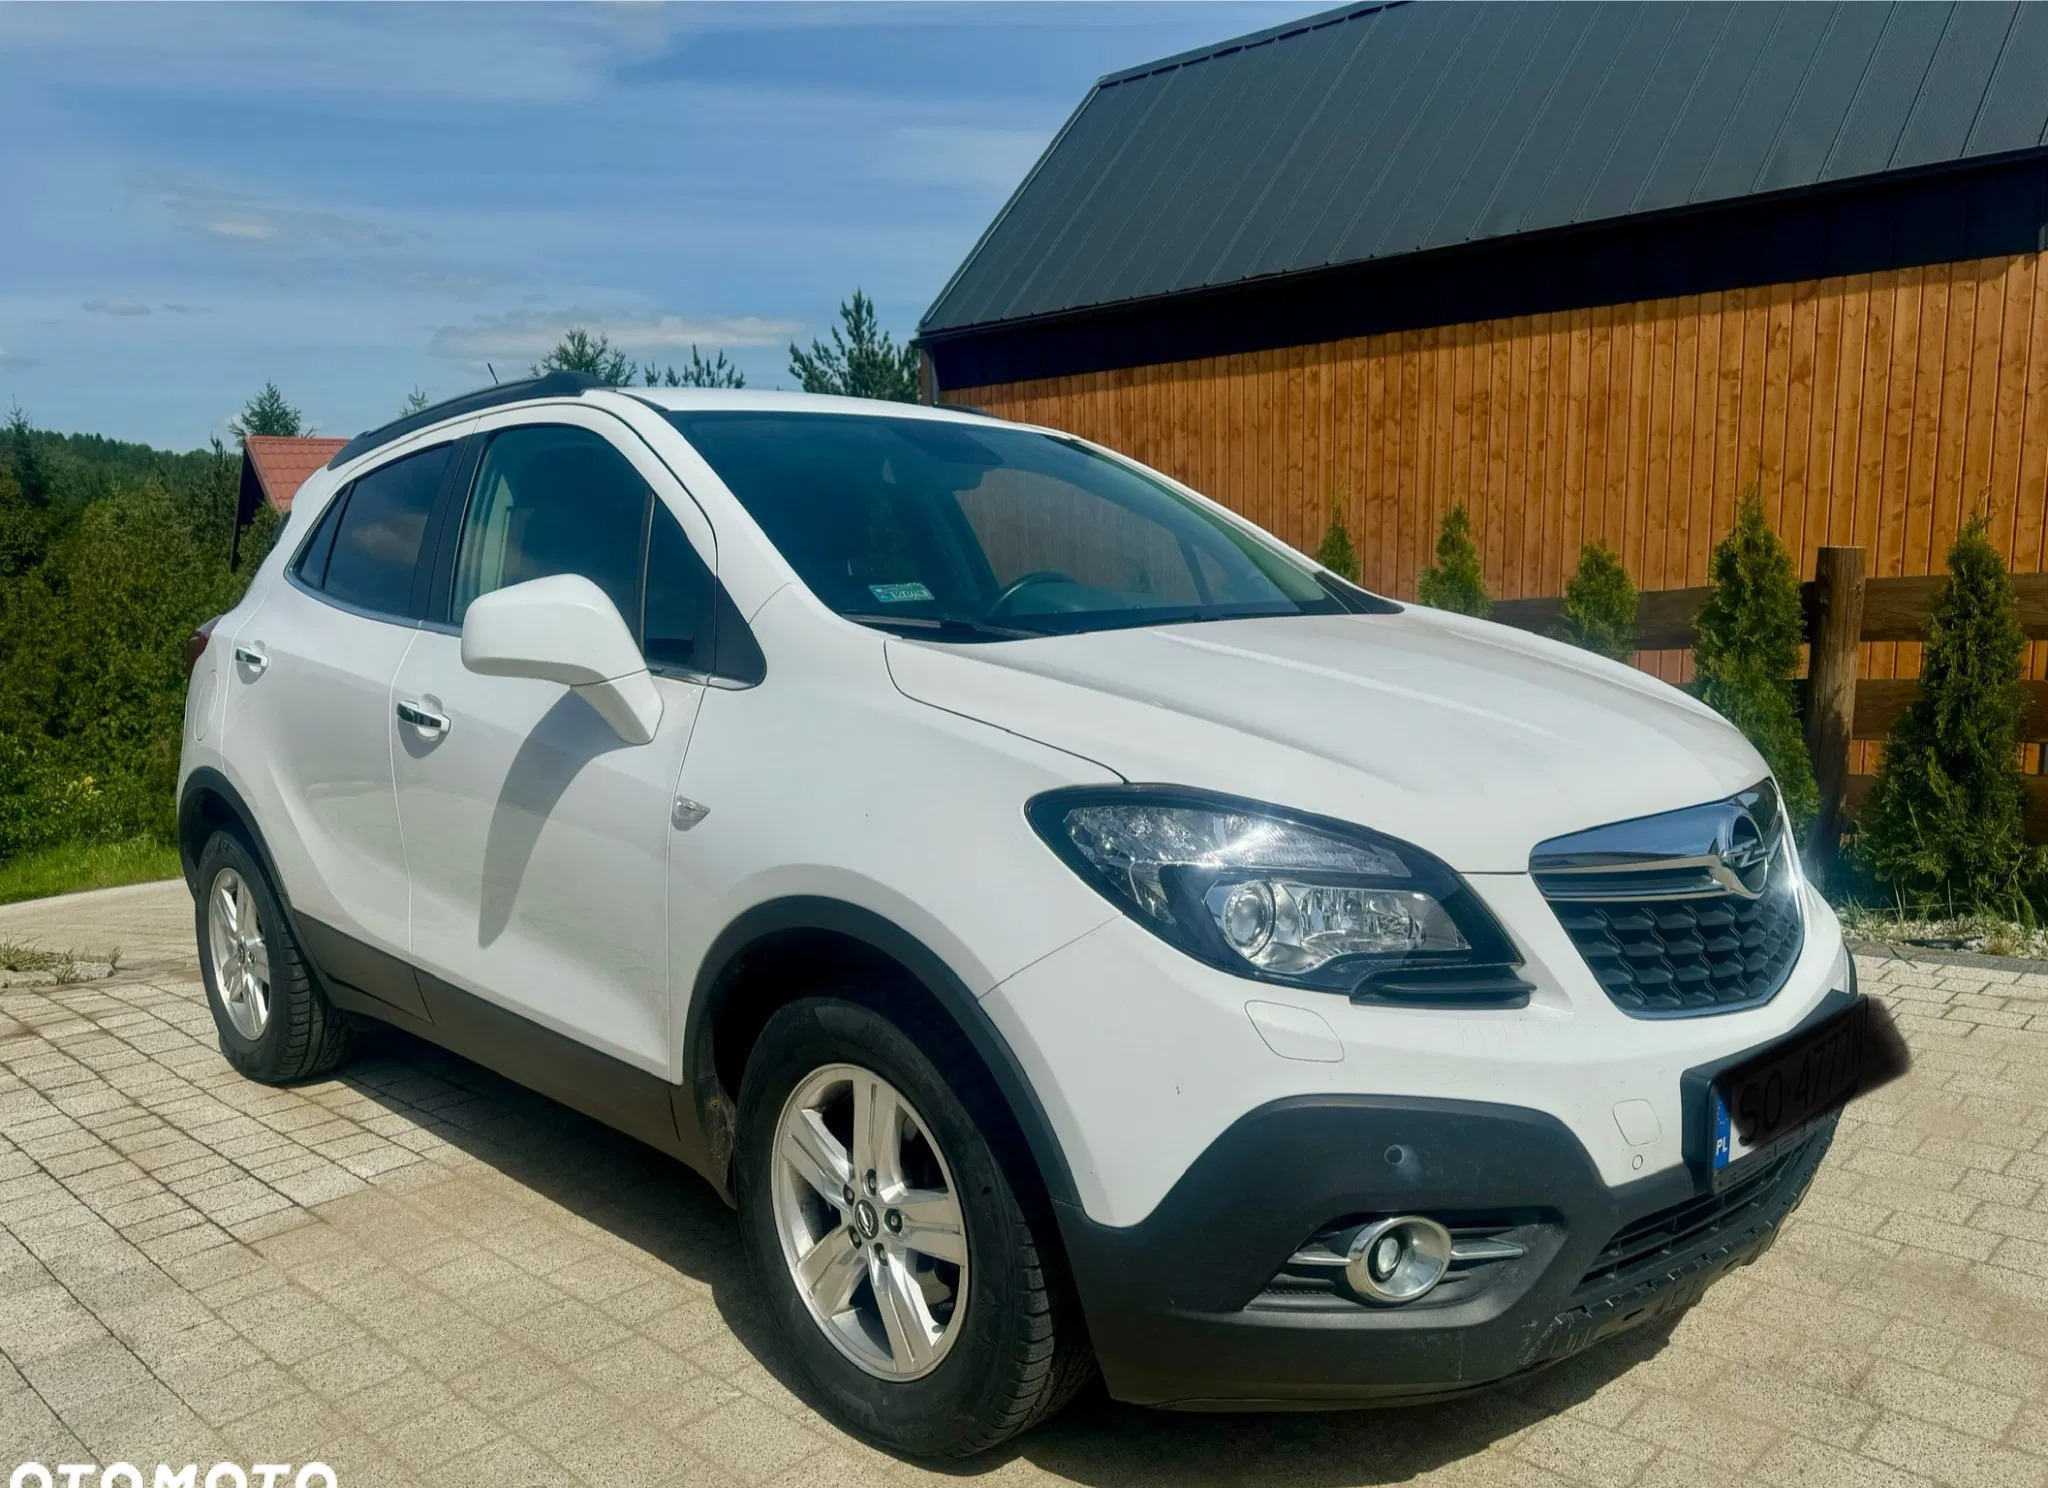 opel Opel Mokka cena 50500 przebieg: 86760, rok produkcji 2014 z Jarocin